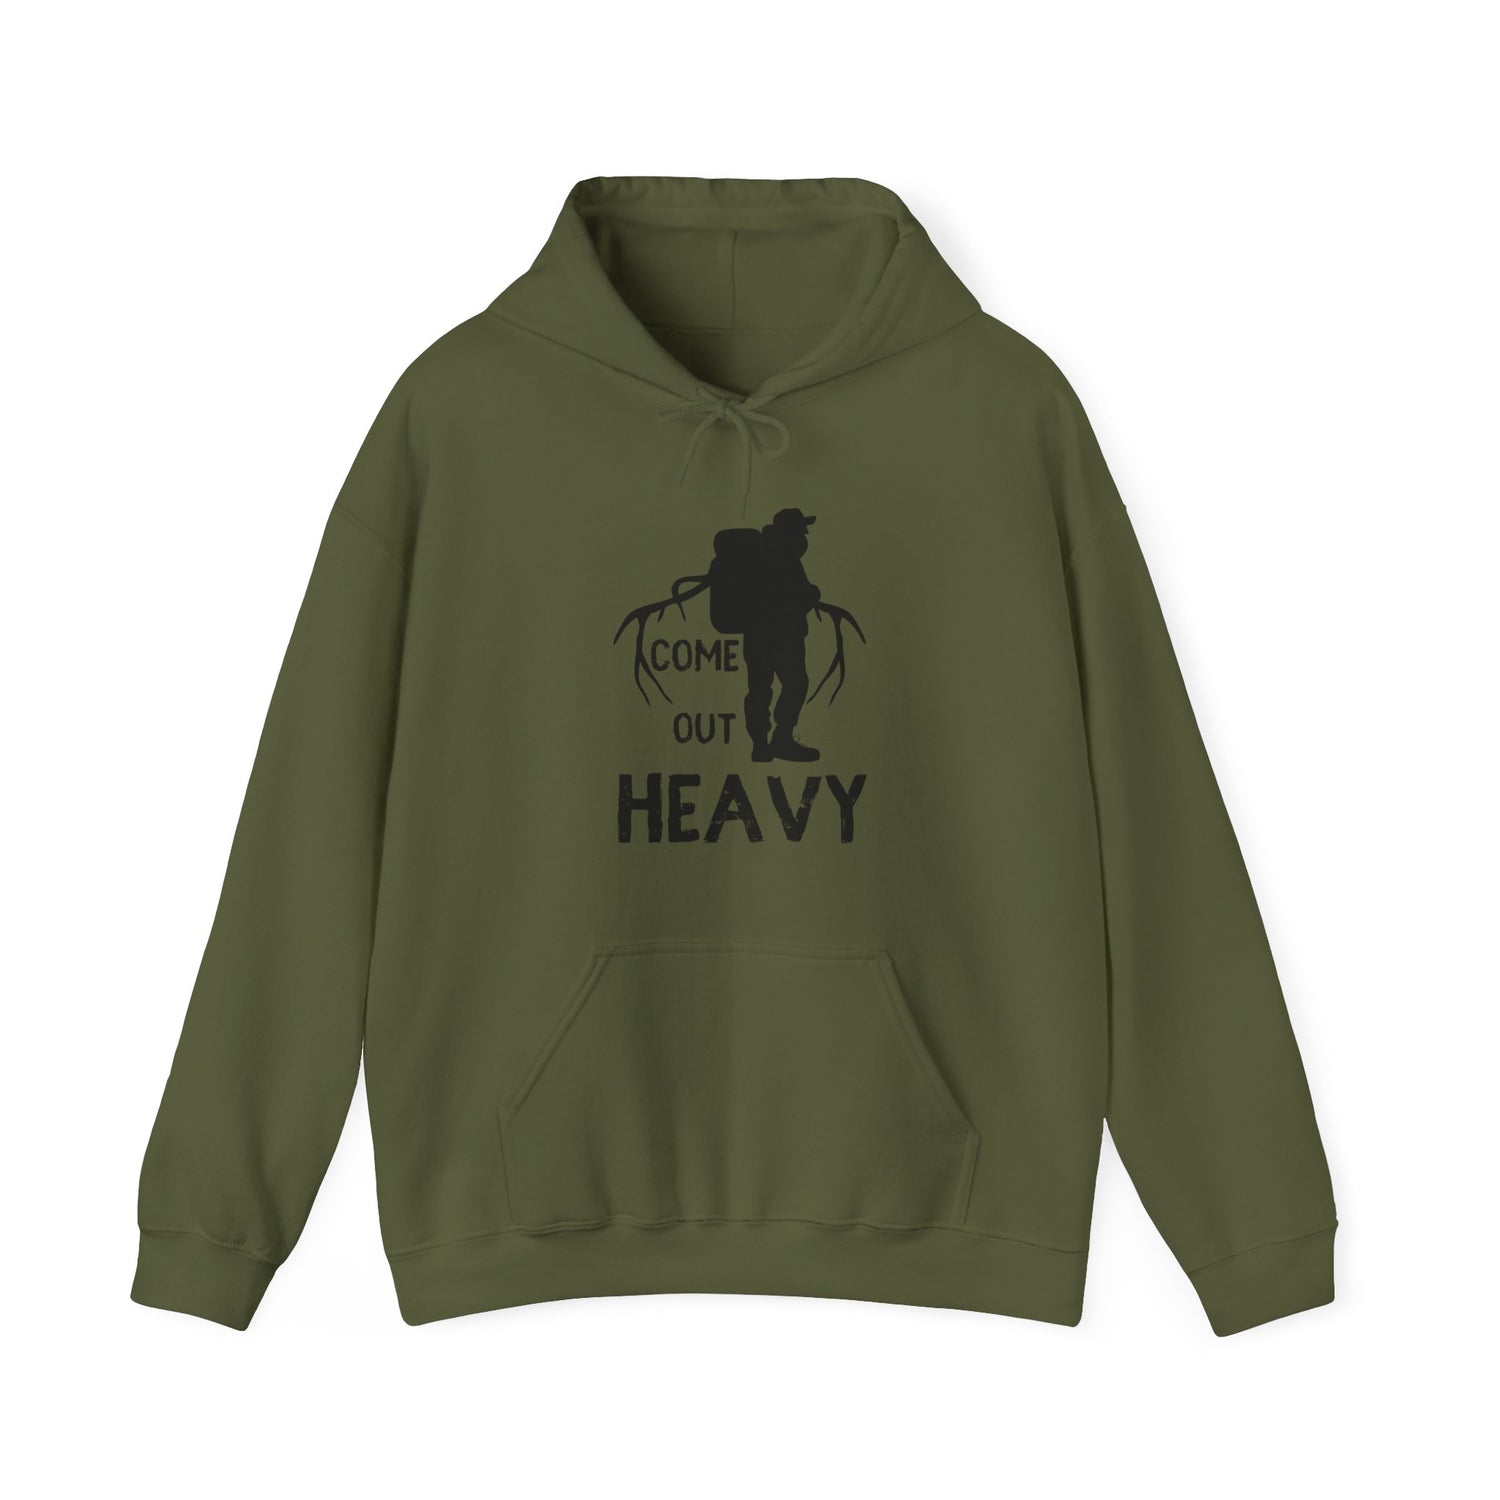 Western Elk Hunting Hoodie - Come Out Heavy